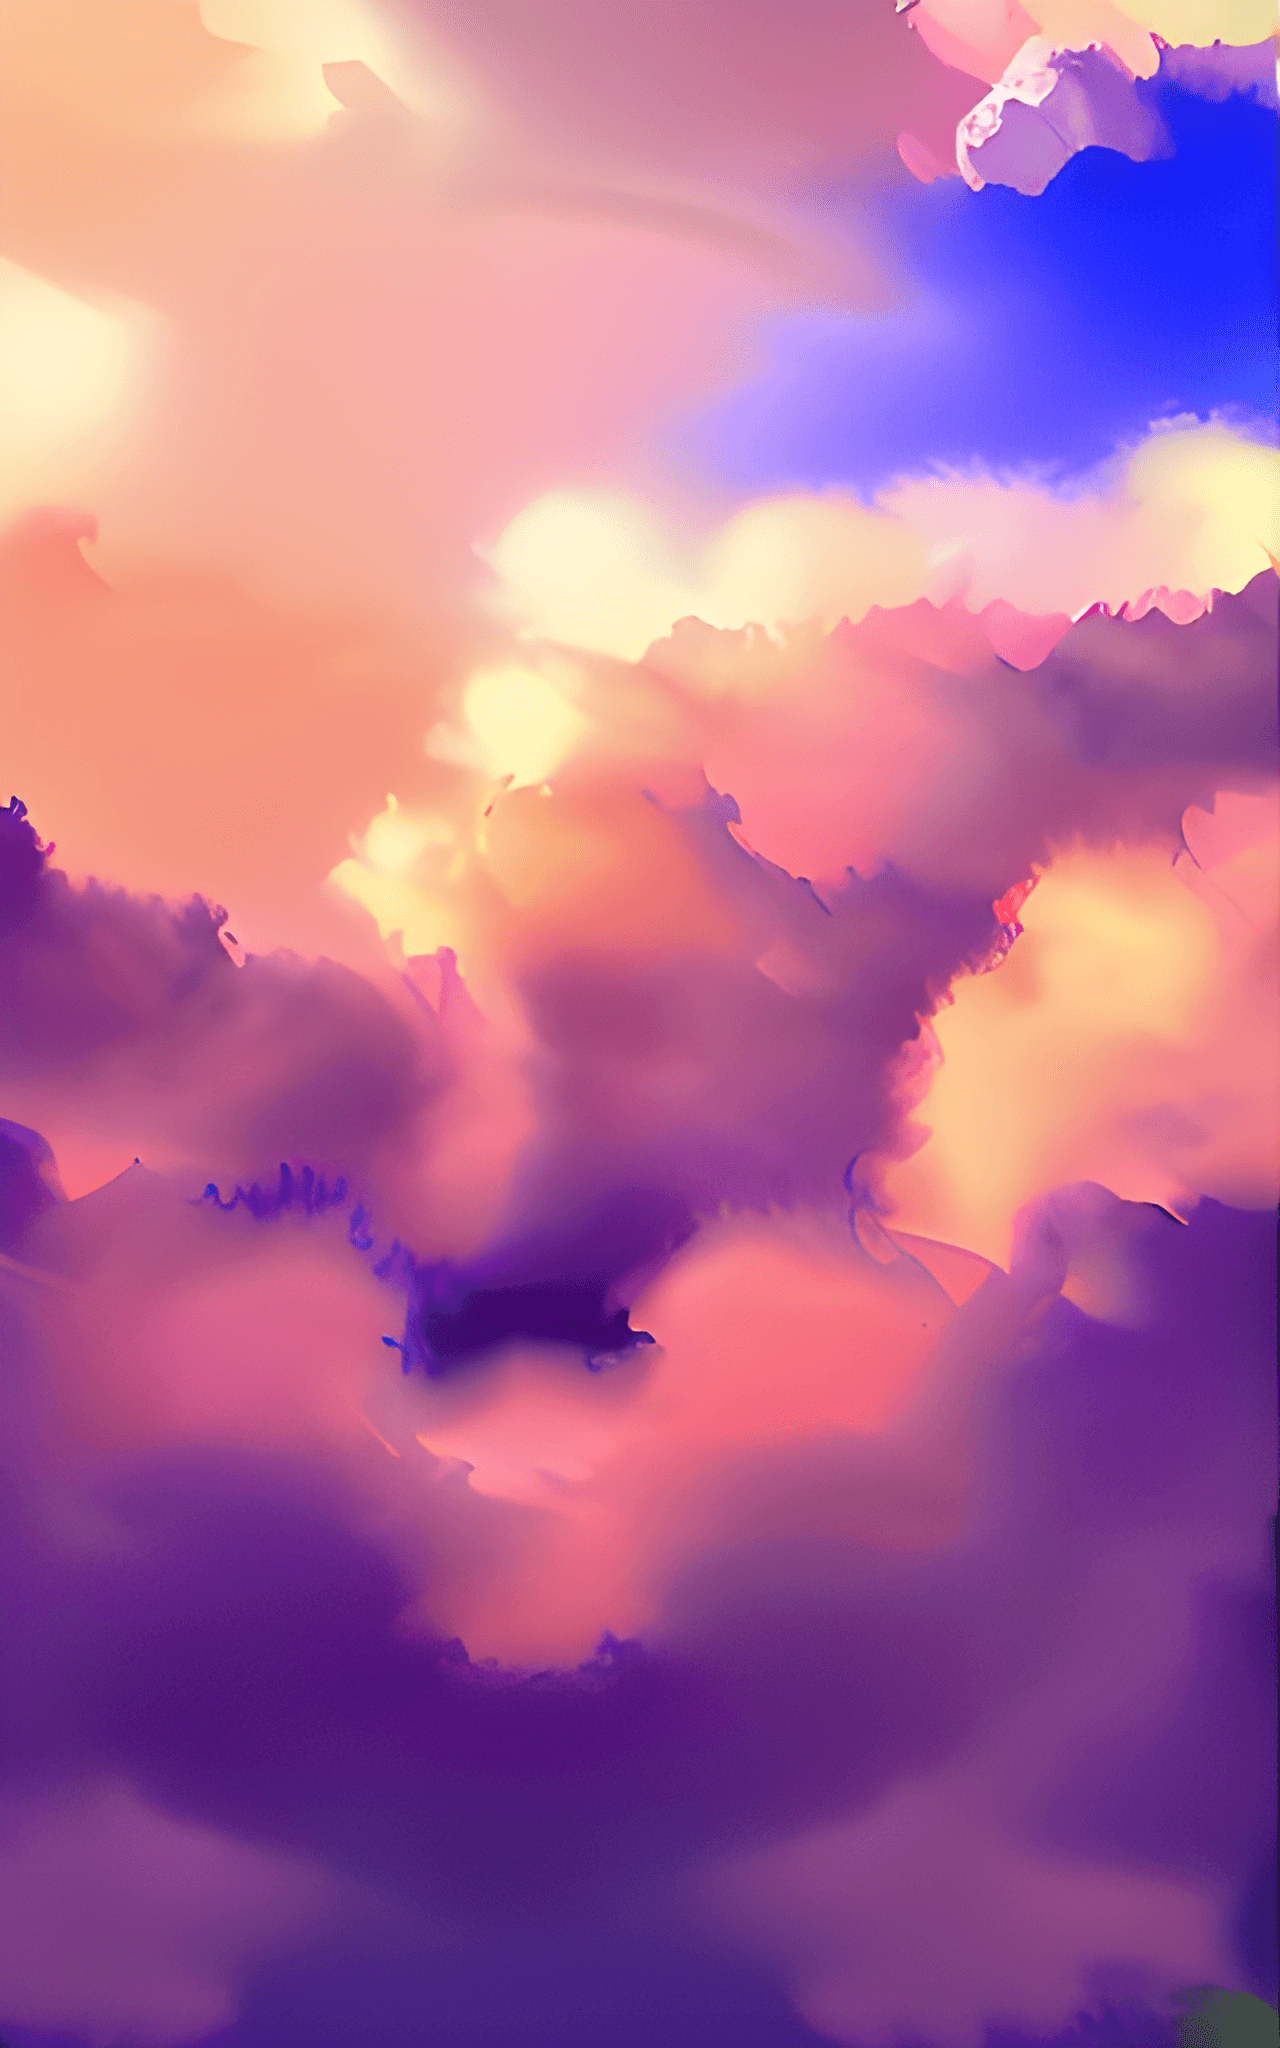 A purple and blue sky with clouds - Sky